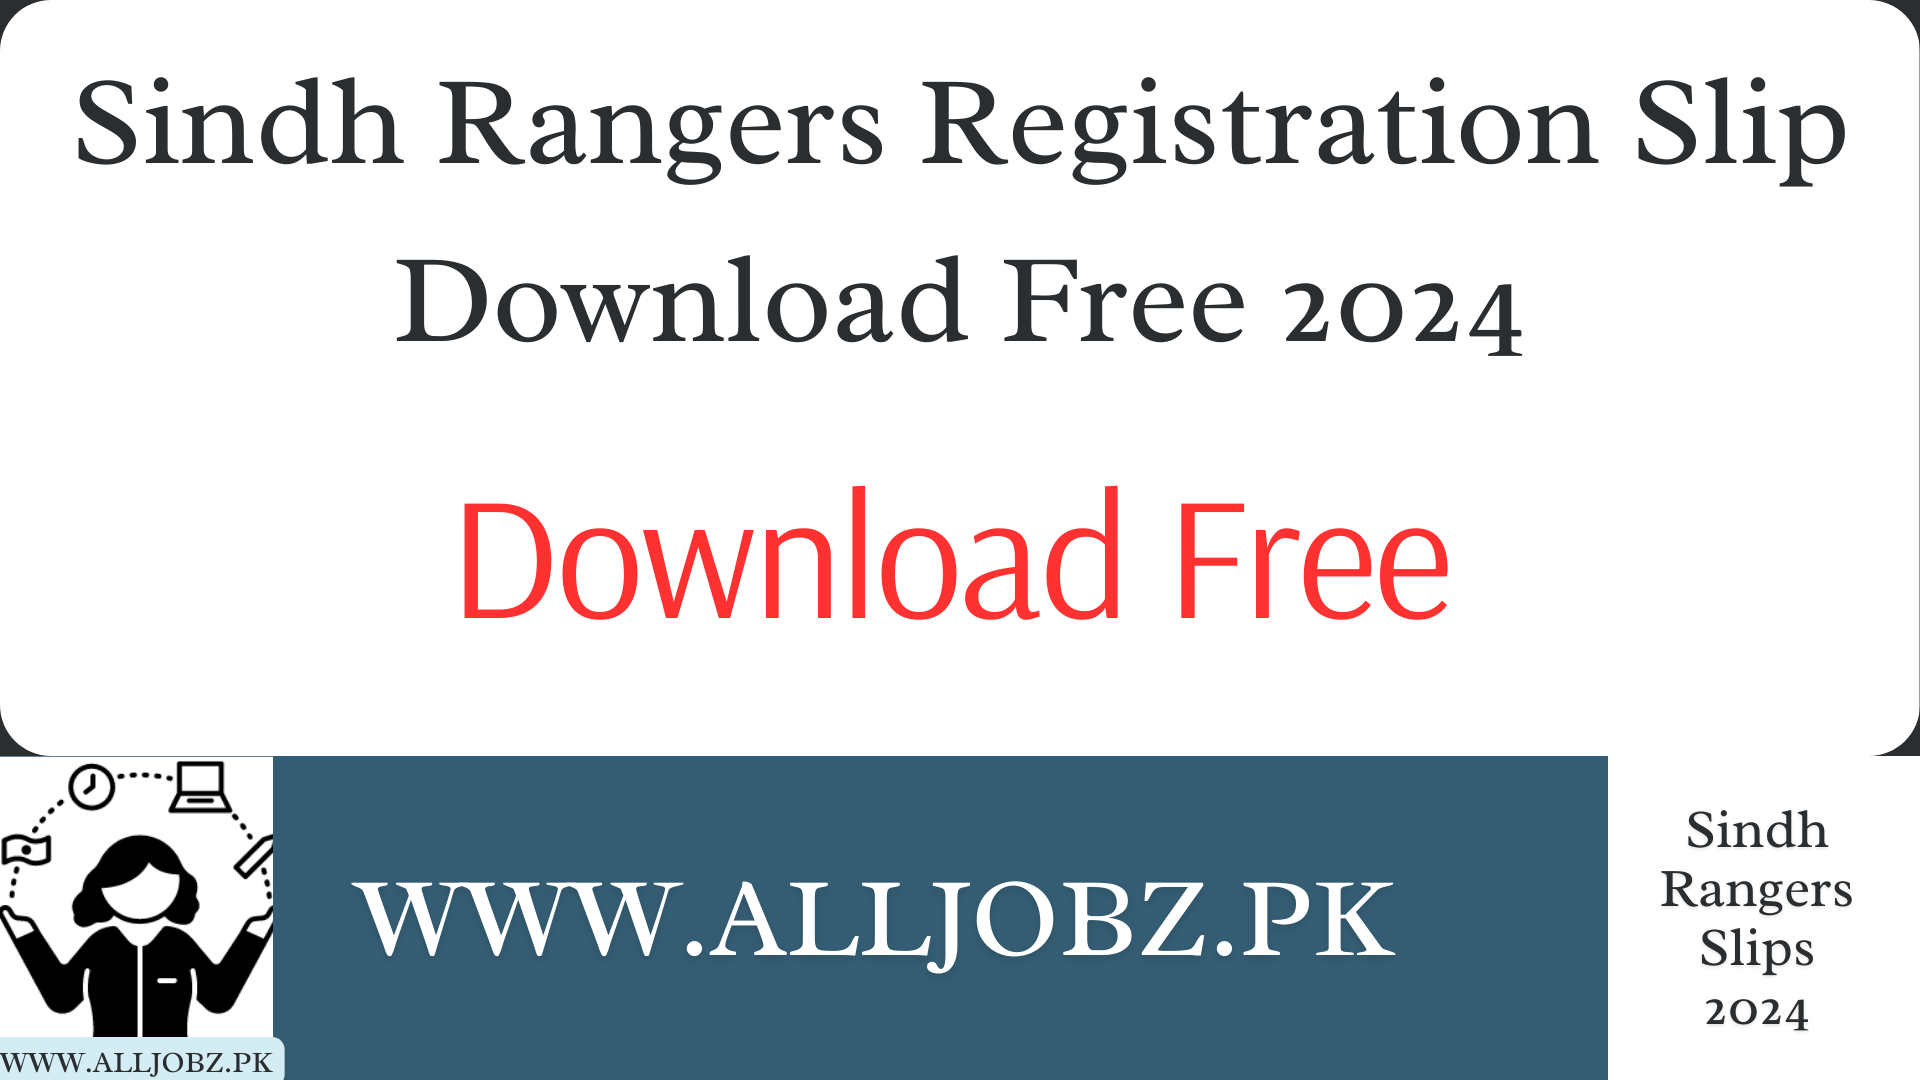 Sindh Rangers Registration Slip Download Free 2024, Sindh Rangers Registration Slip 2024 Download Free Pakistan, Sindh Rangers Registration Slip 2024 Download Free Online,